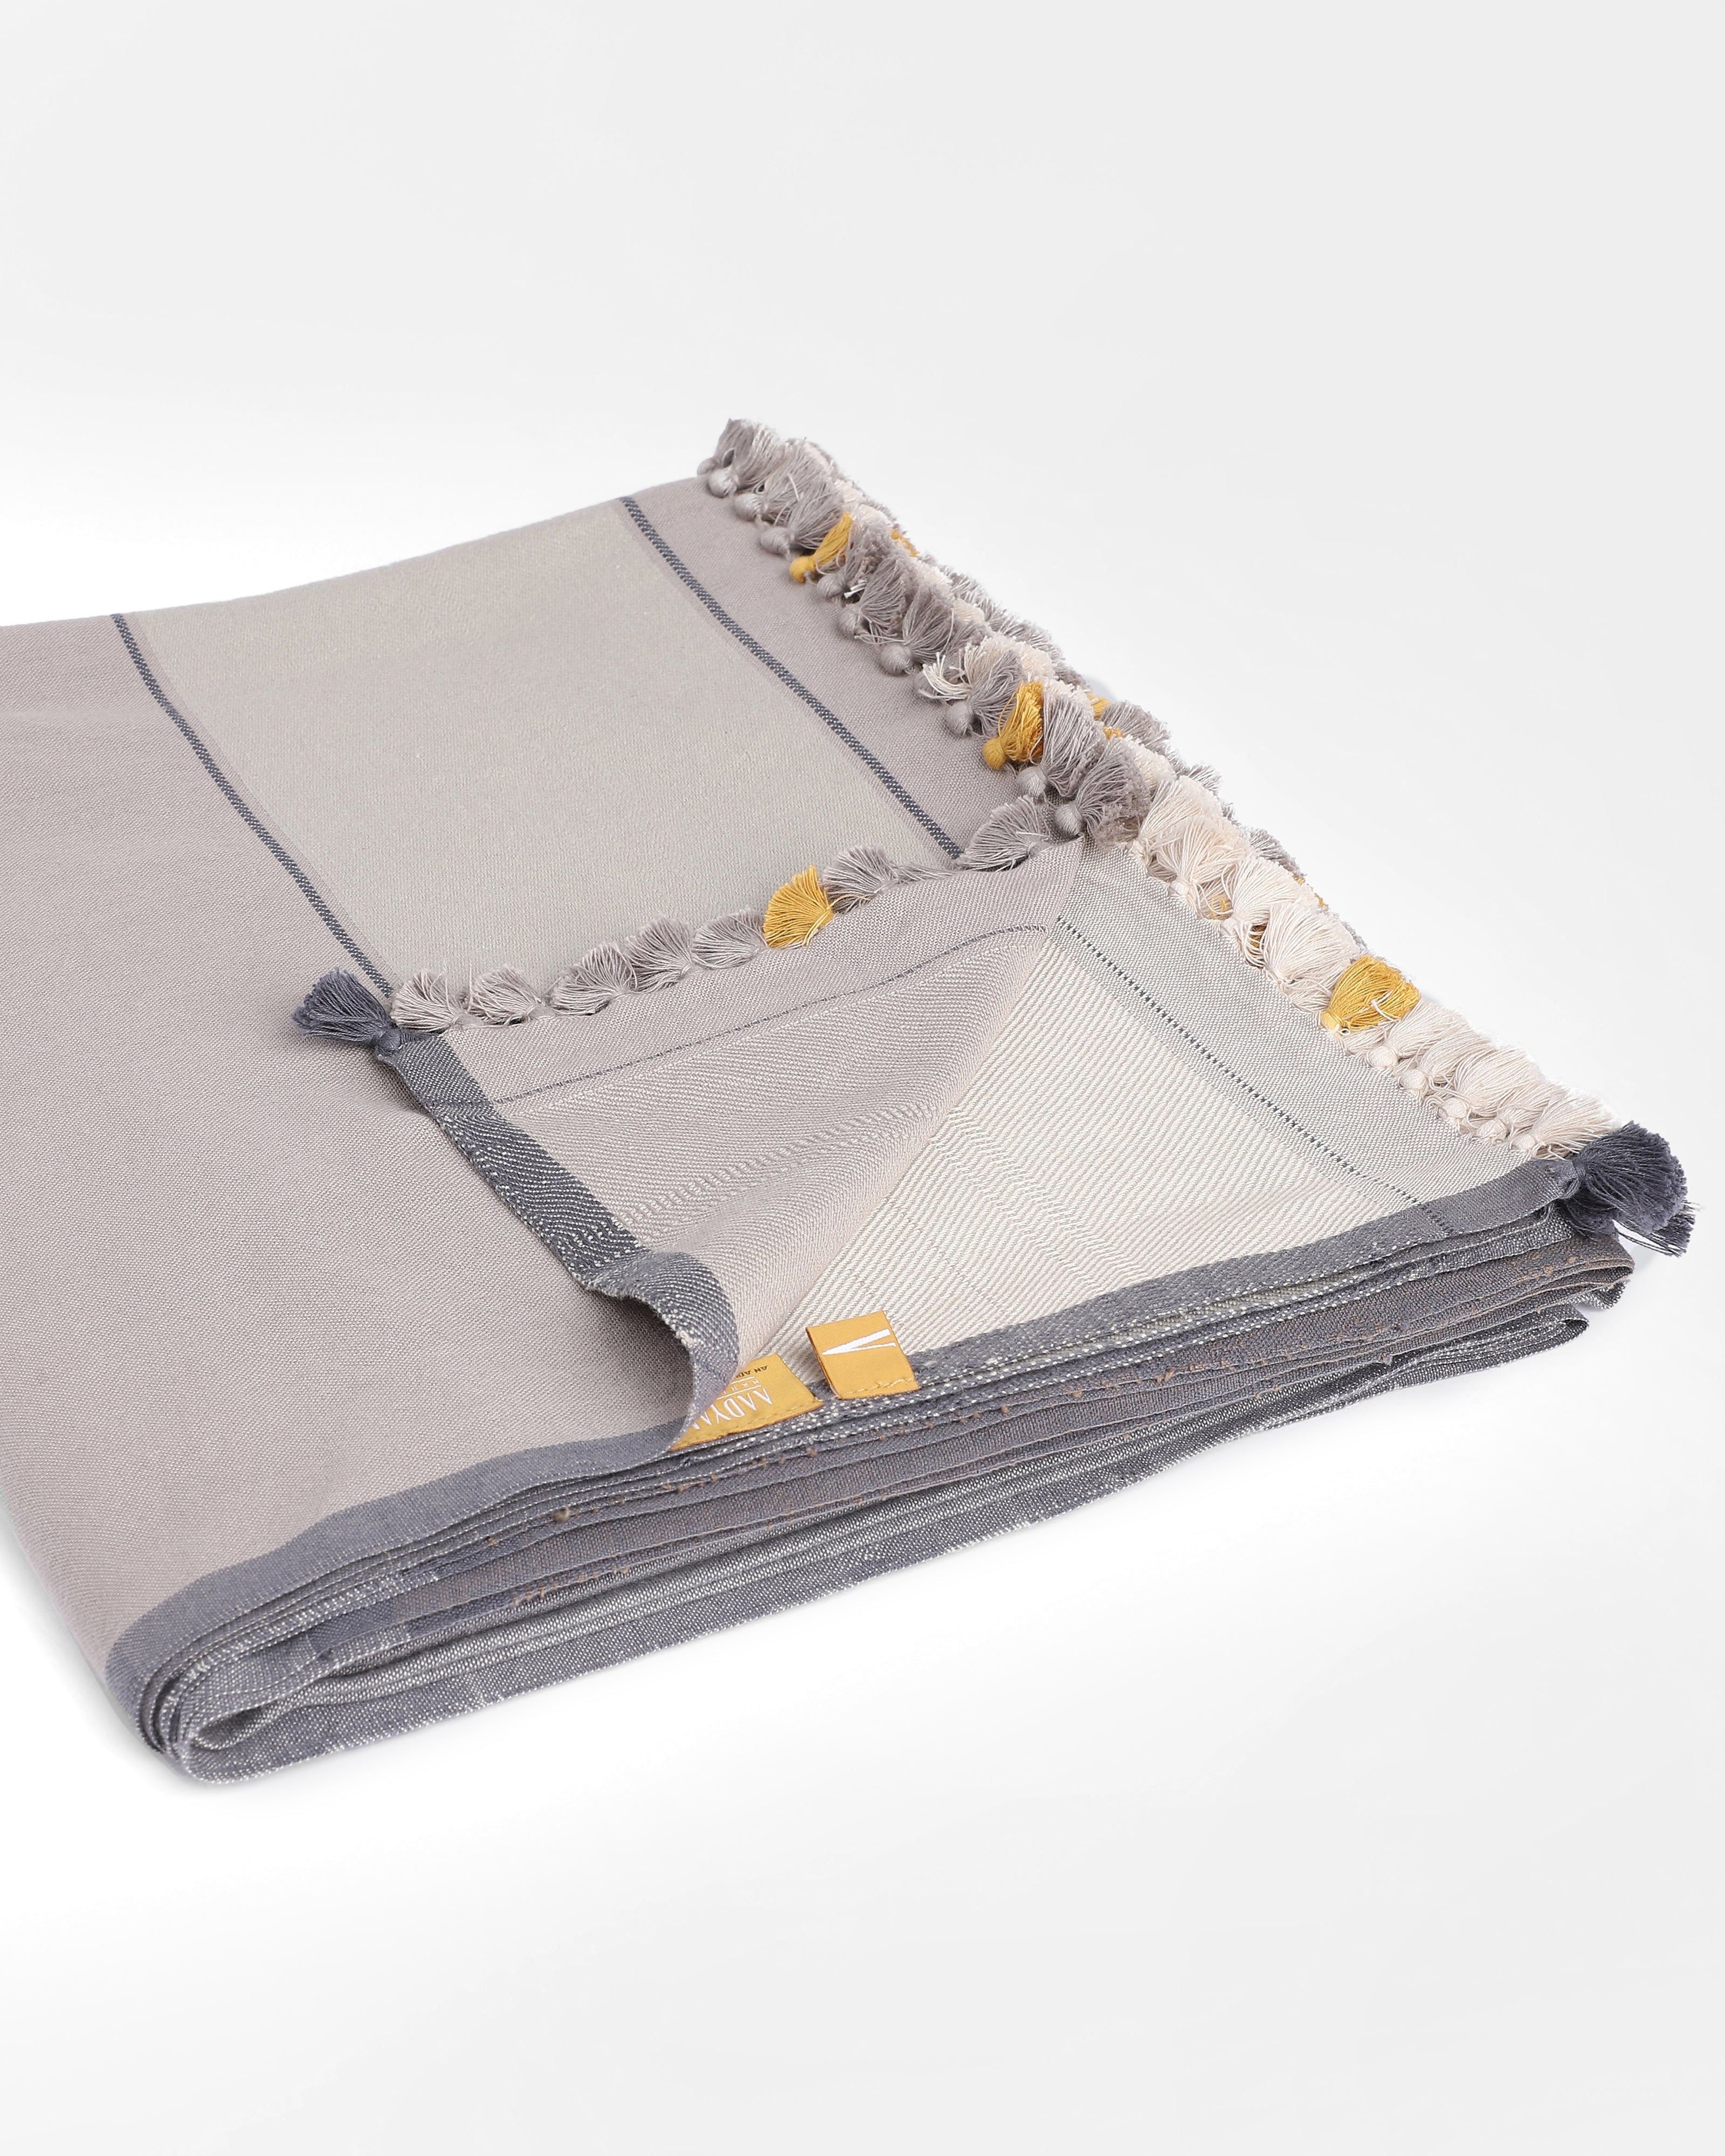 Azra Extra Weft Cotton Bed Cover - Medium Beige